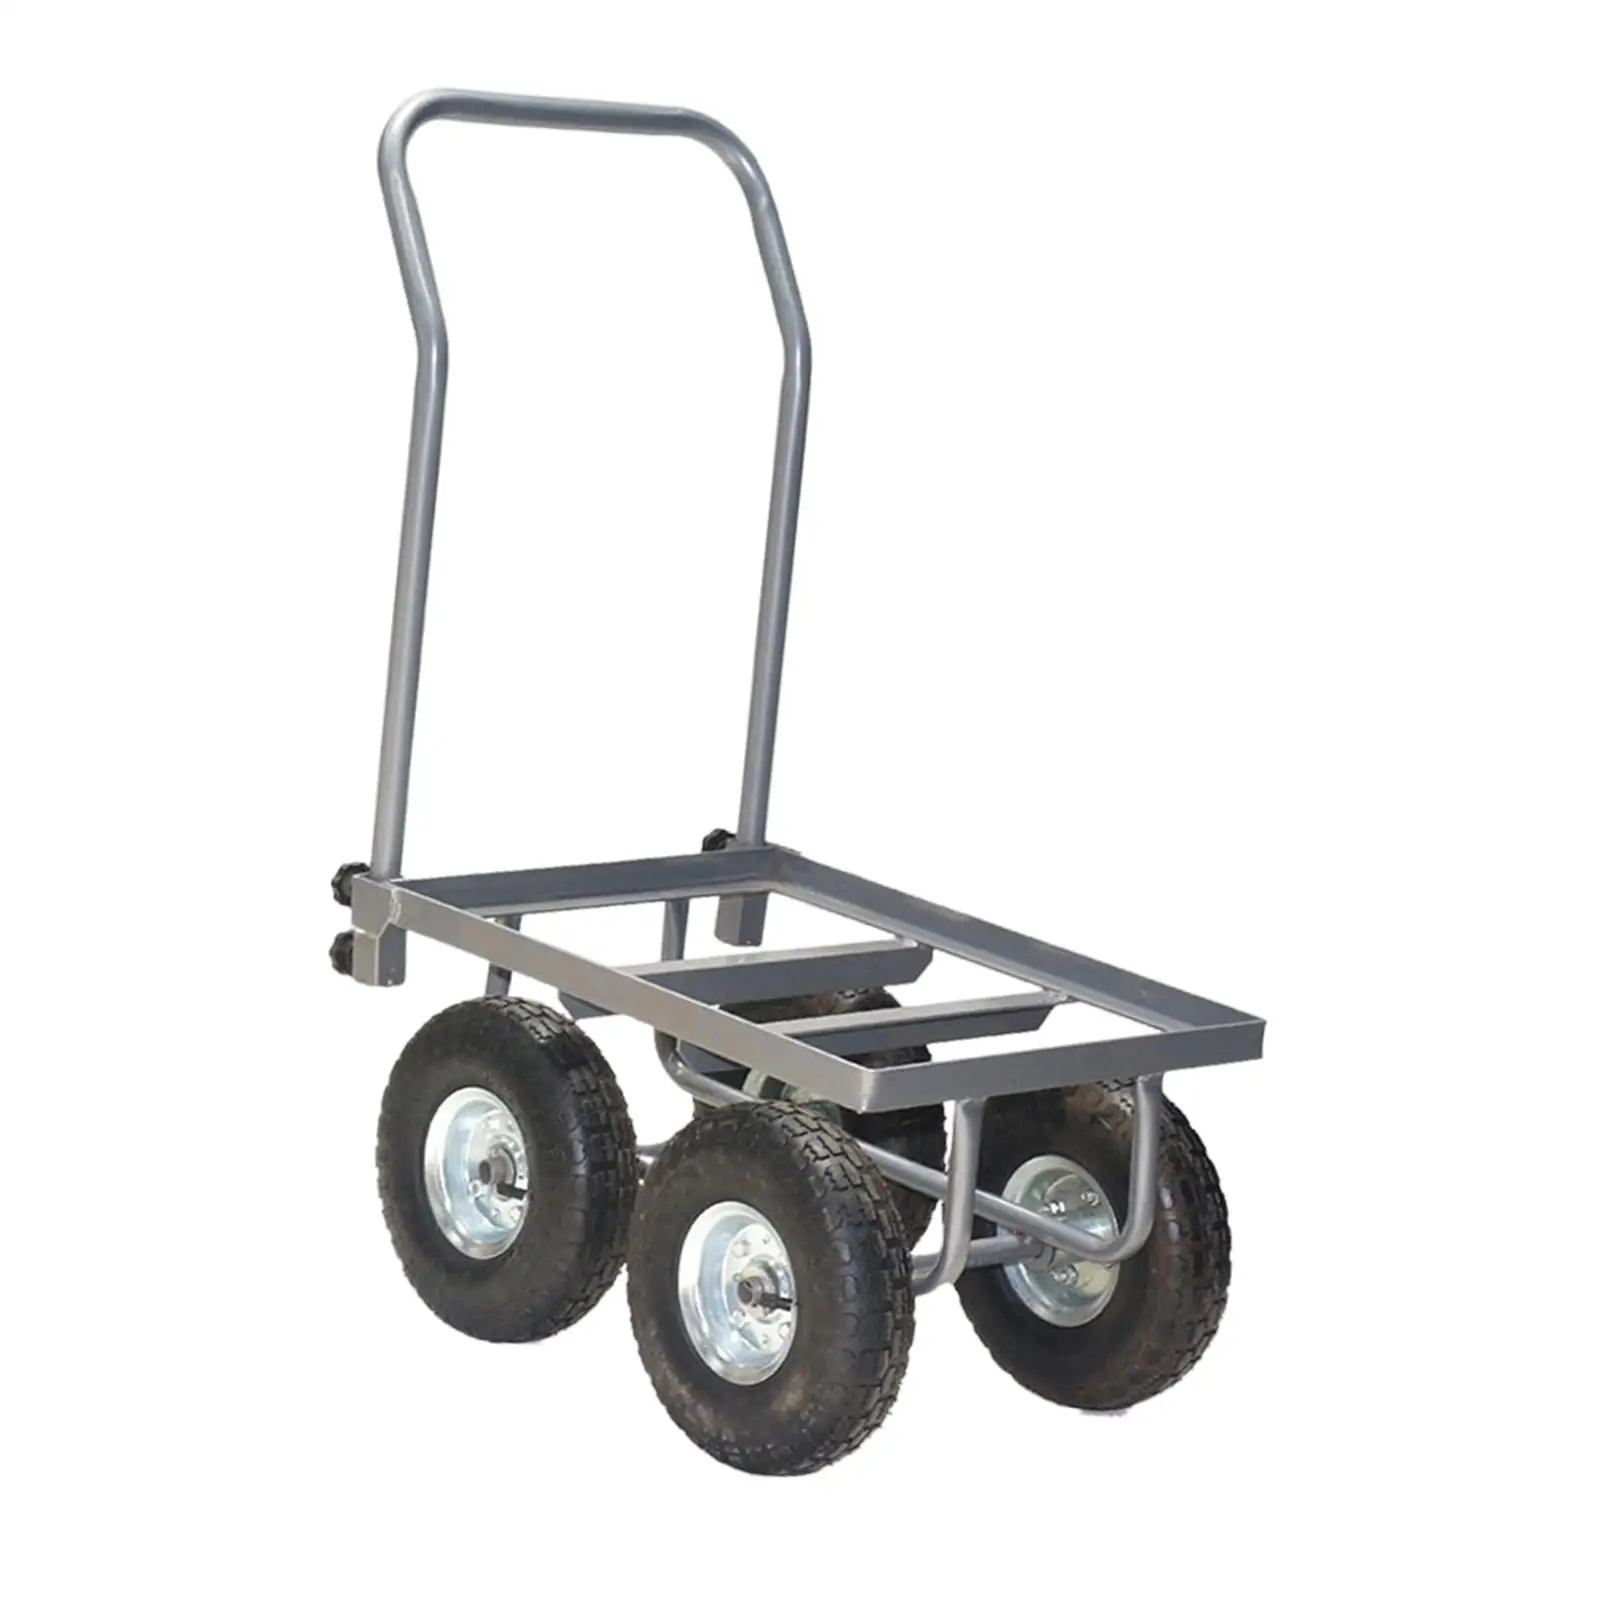 Platform Truck Cart 264LBS Folding Push Cart Portable Cart with Wheels Heavy